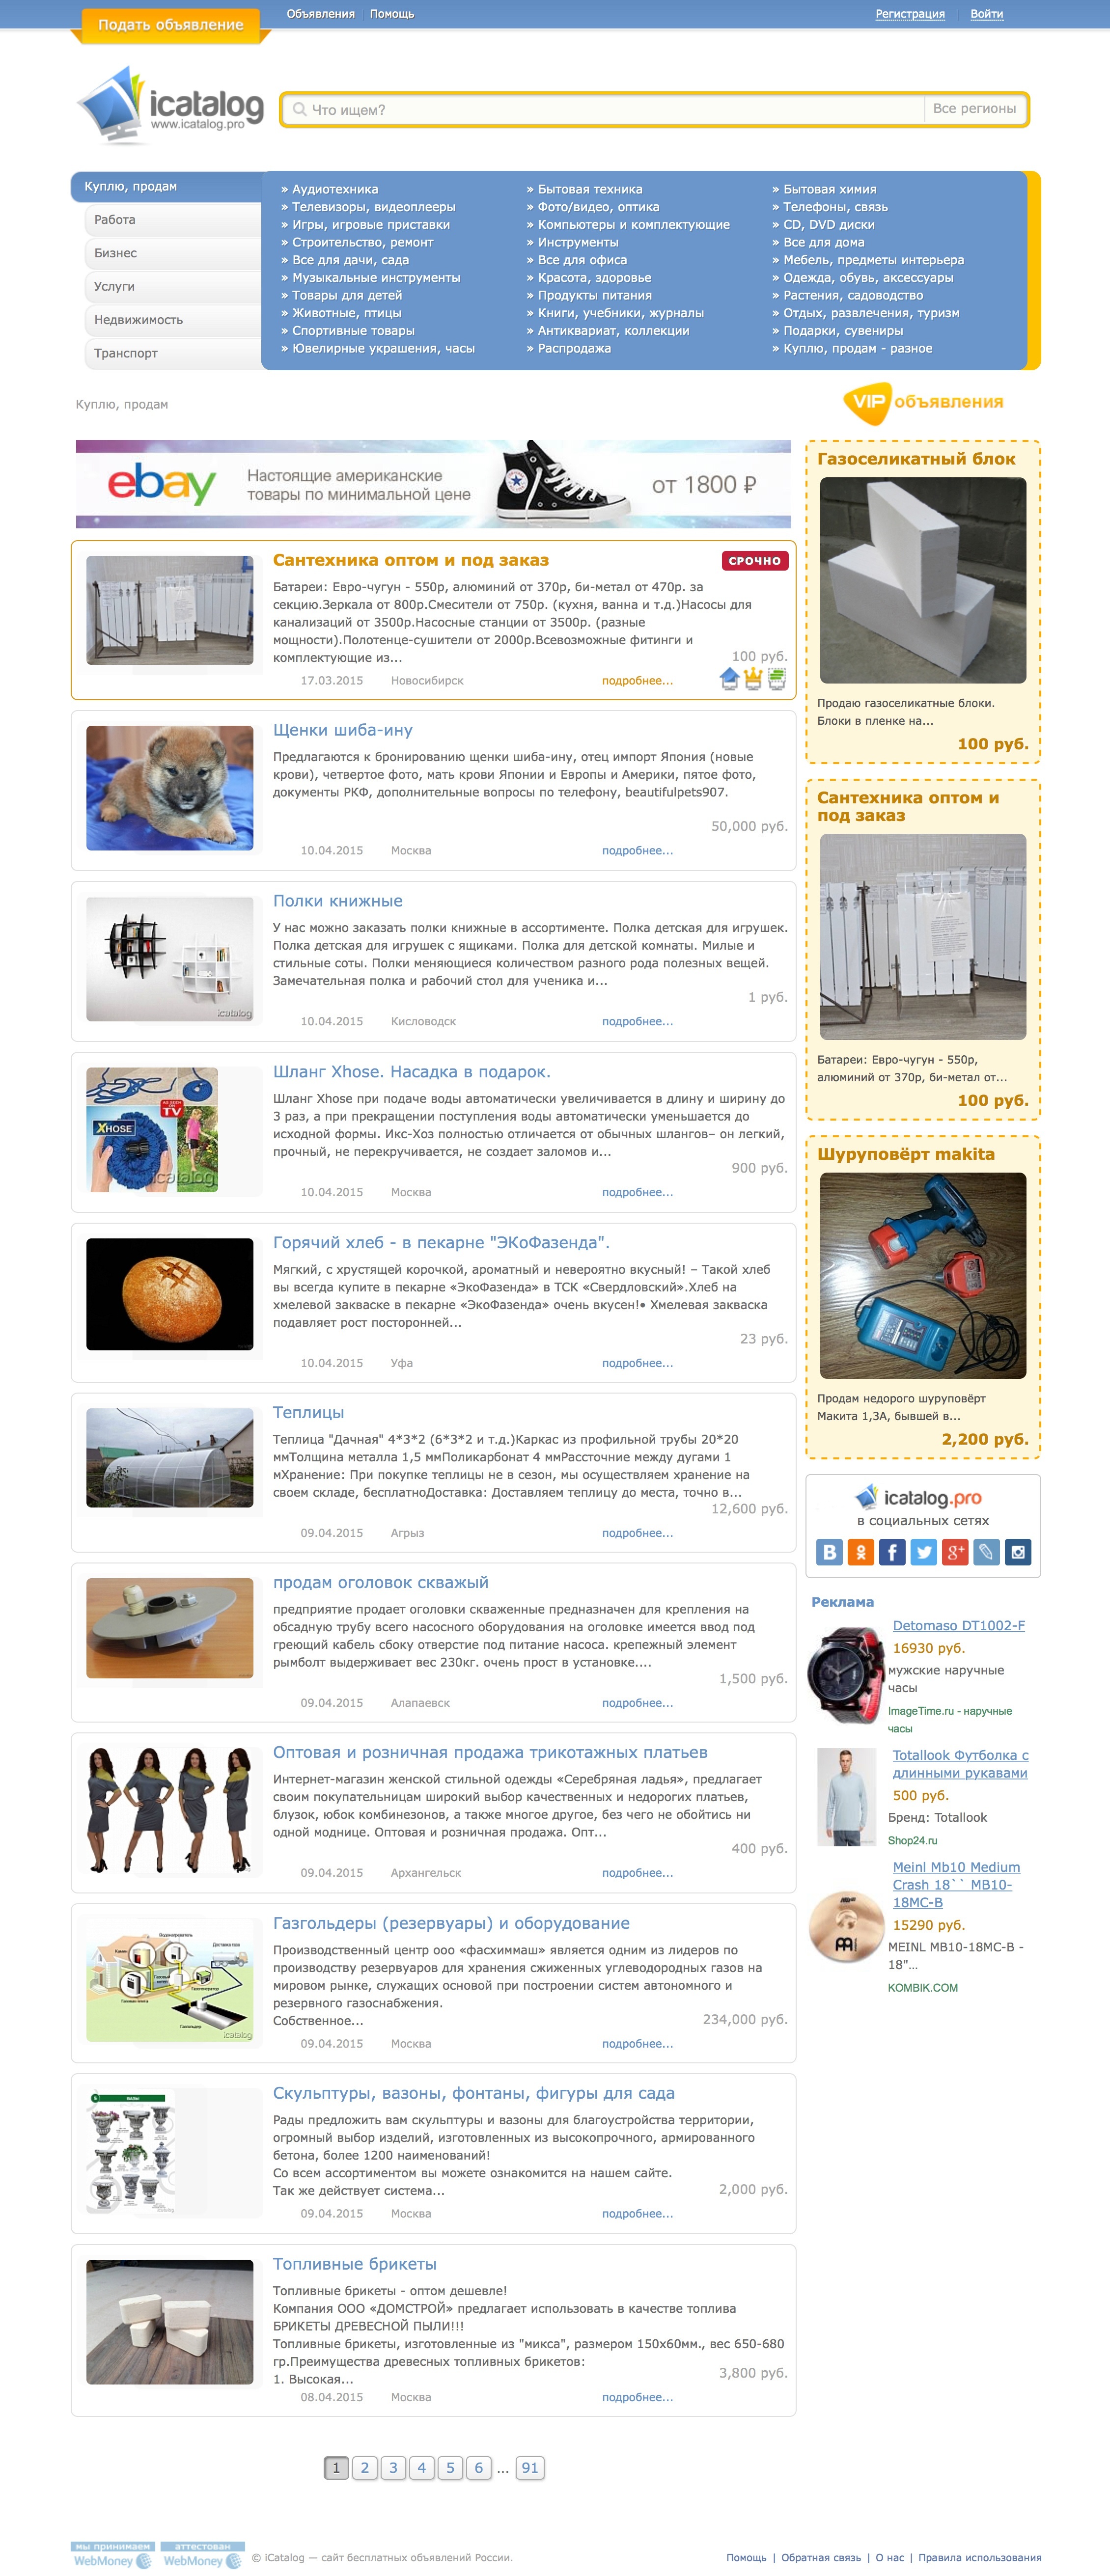 iCatalog - Ads board №2- Category page